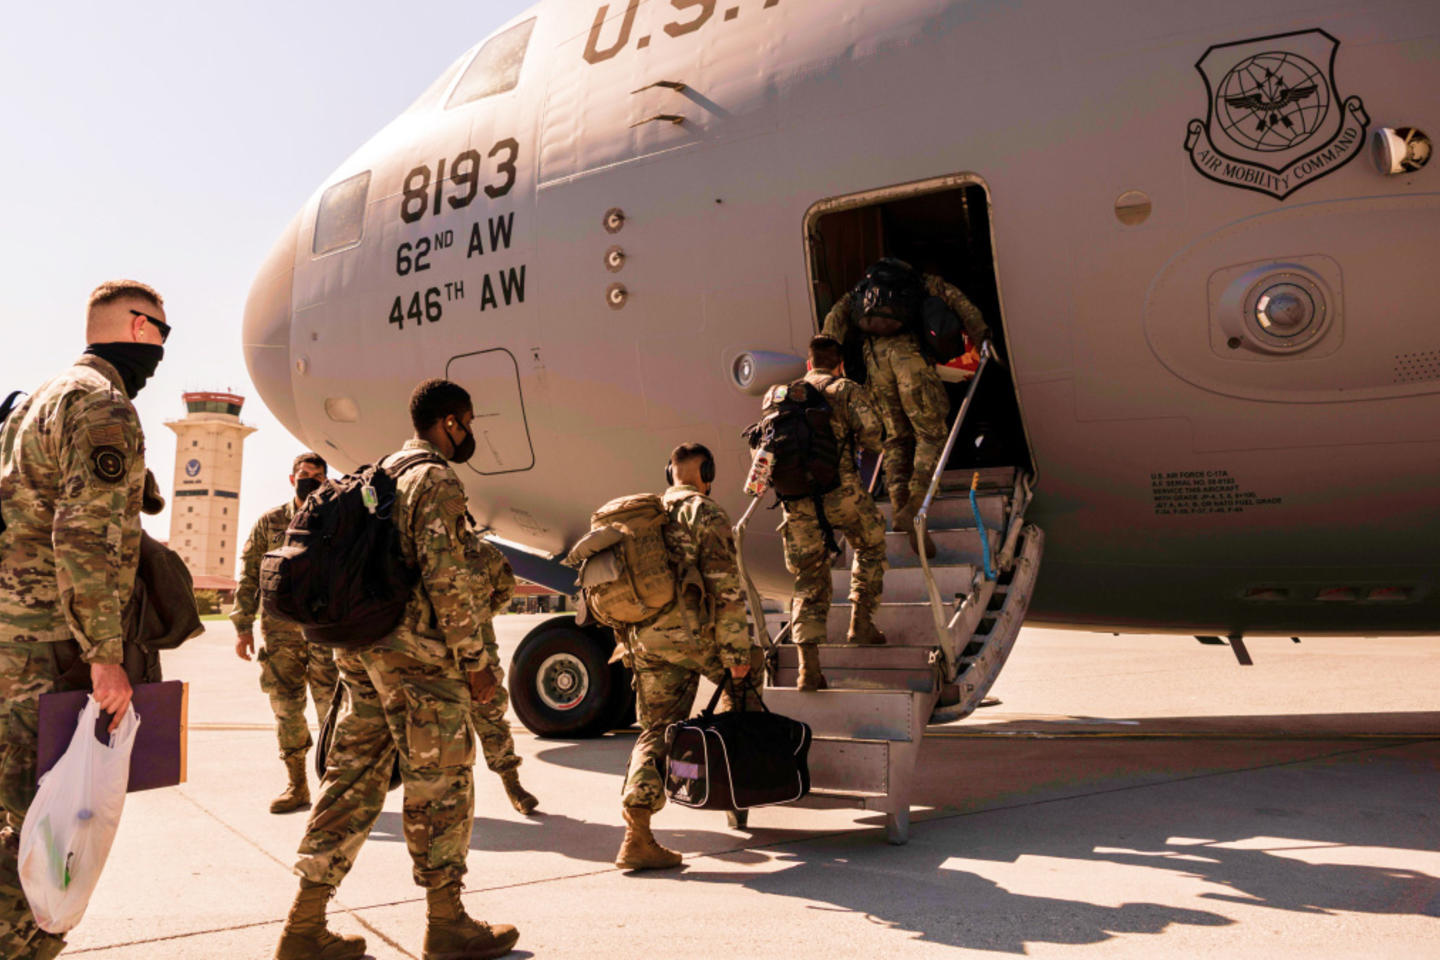 U.S. servicemembers board an airplane.